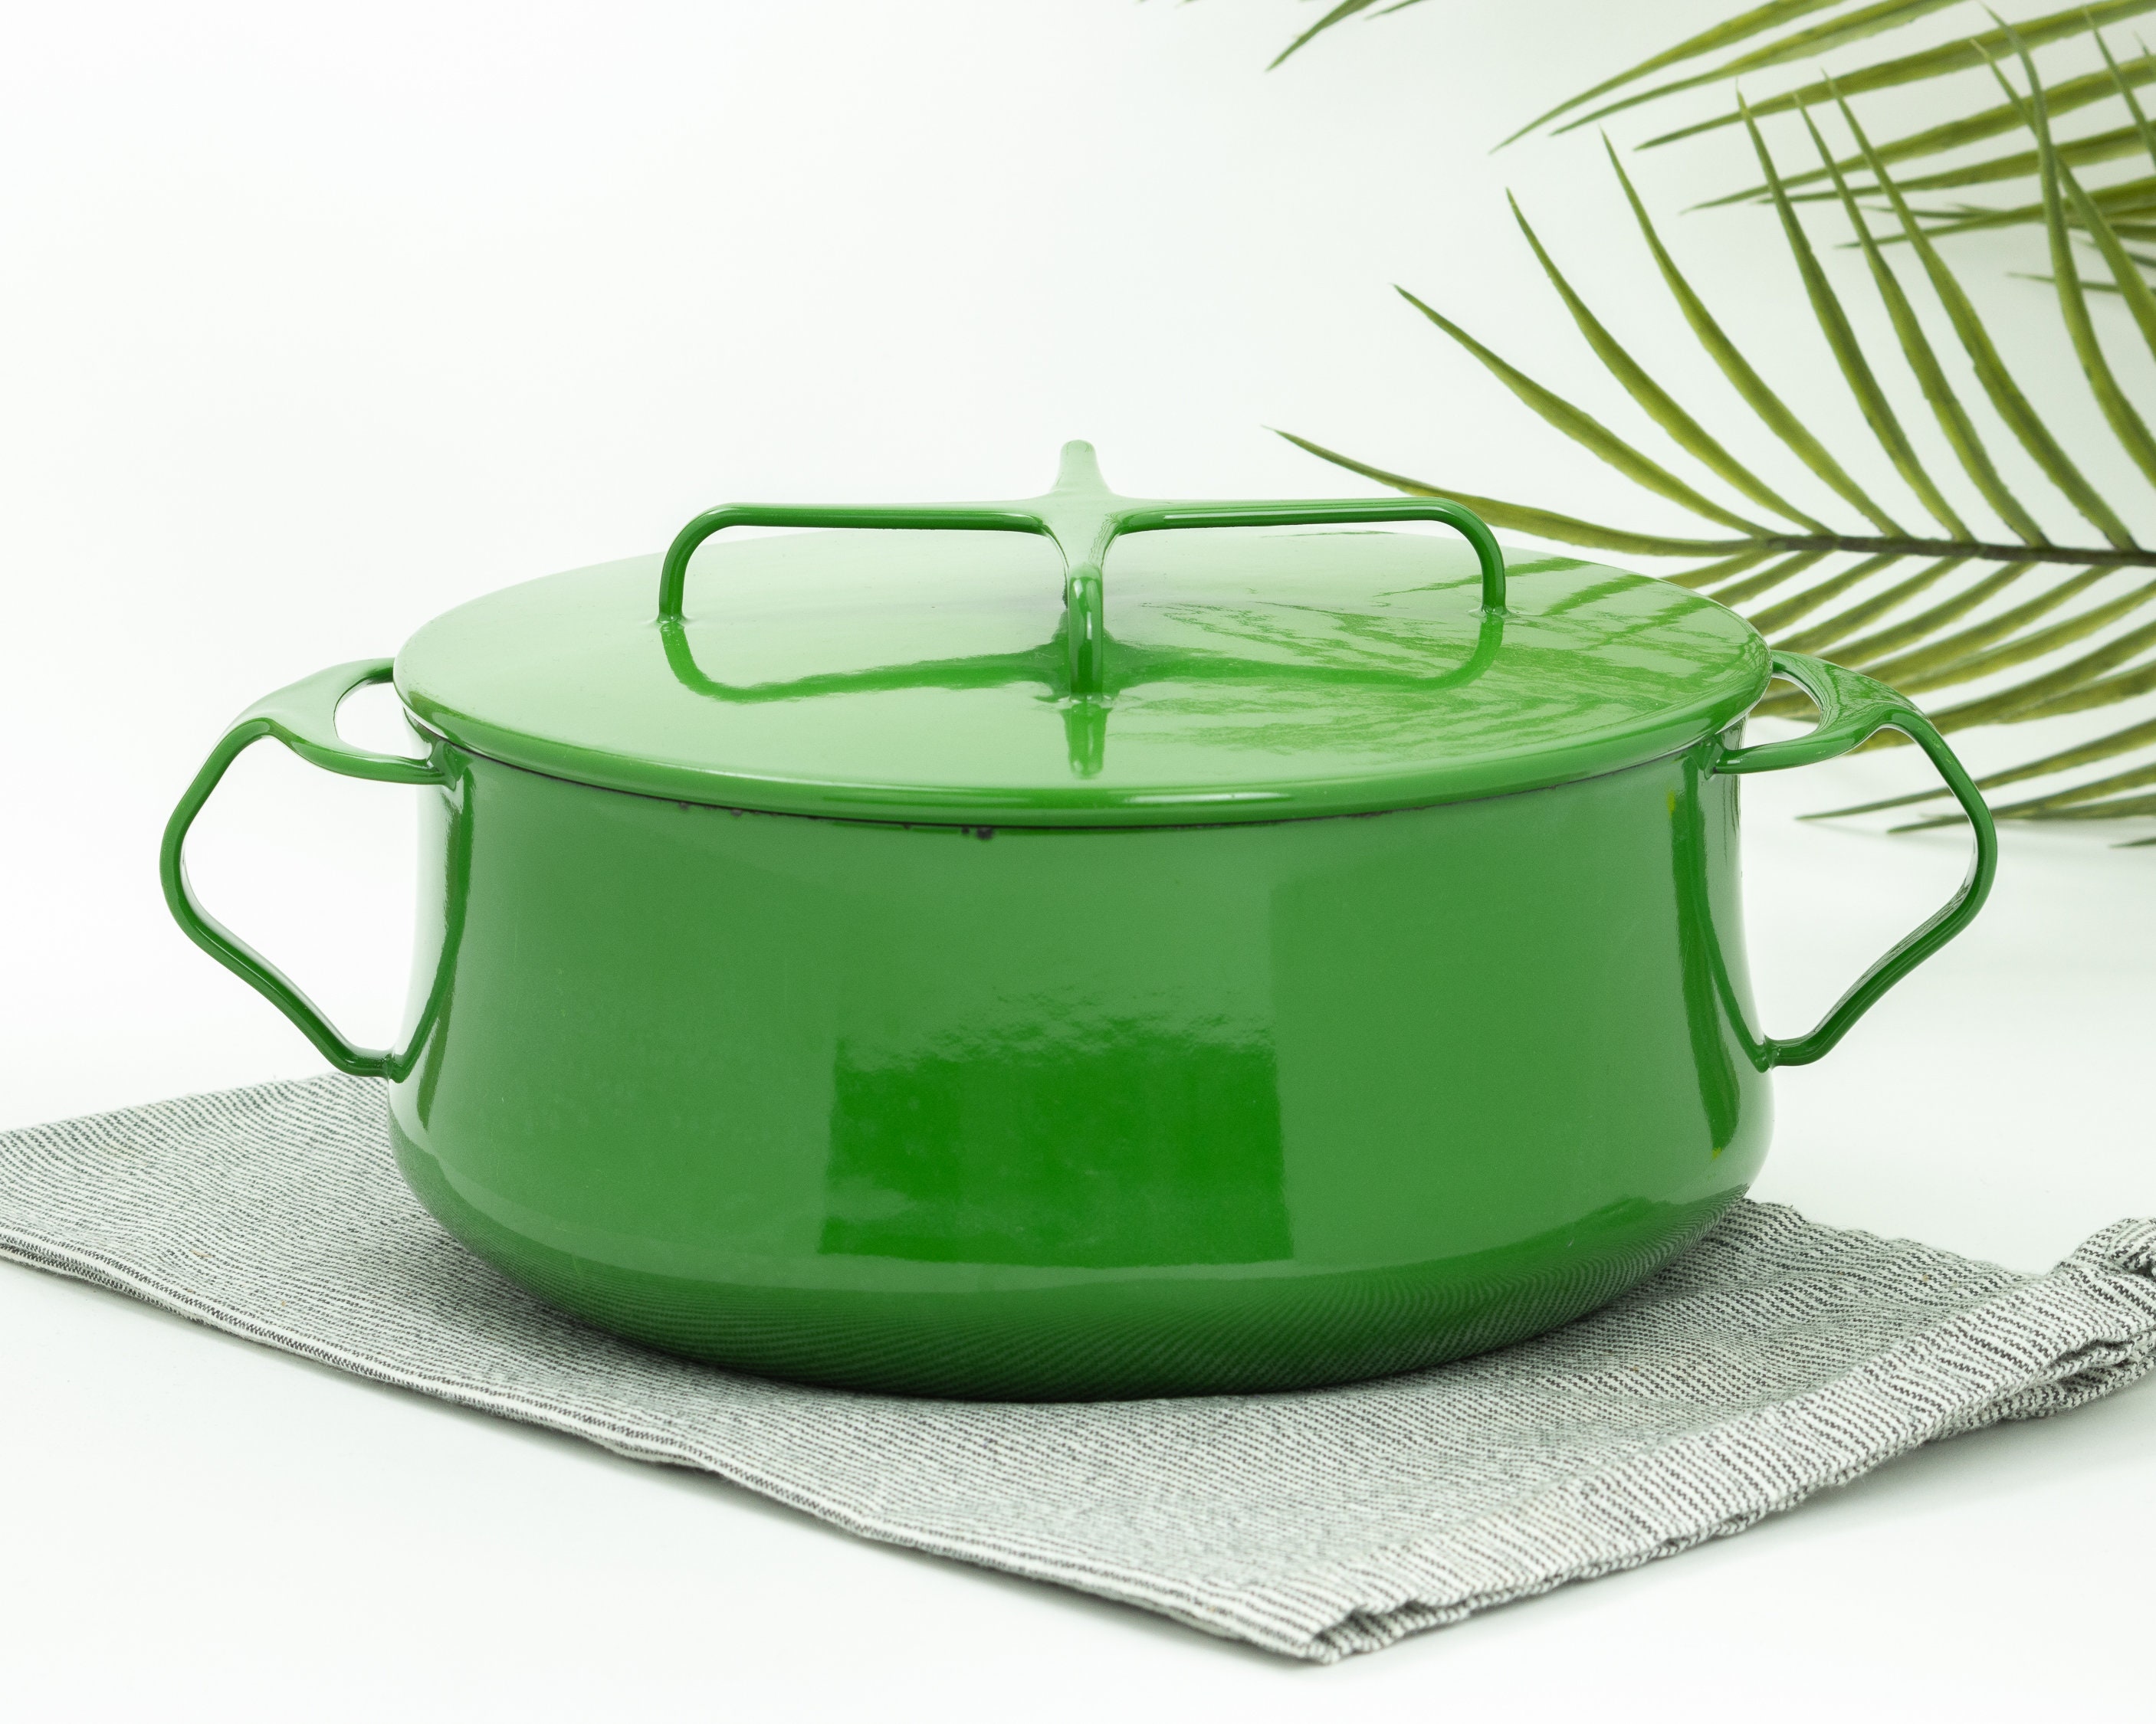 Dansk Kobenstyle Dutch Oven, 4 Qt. Green Enamel Pot with Lid